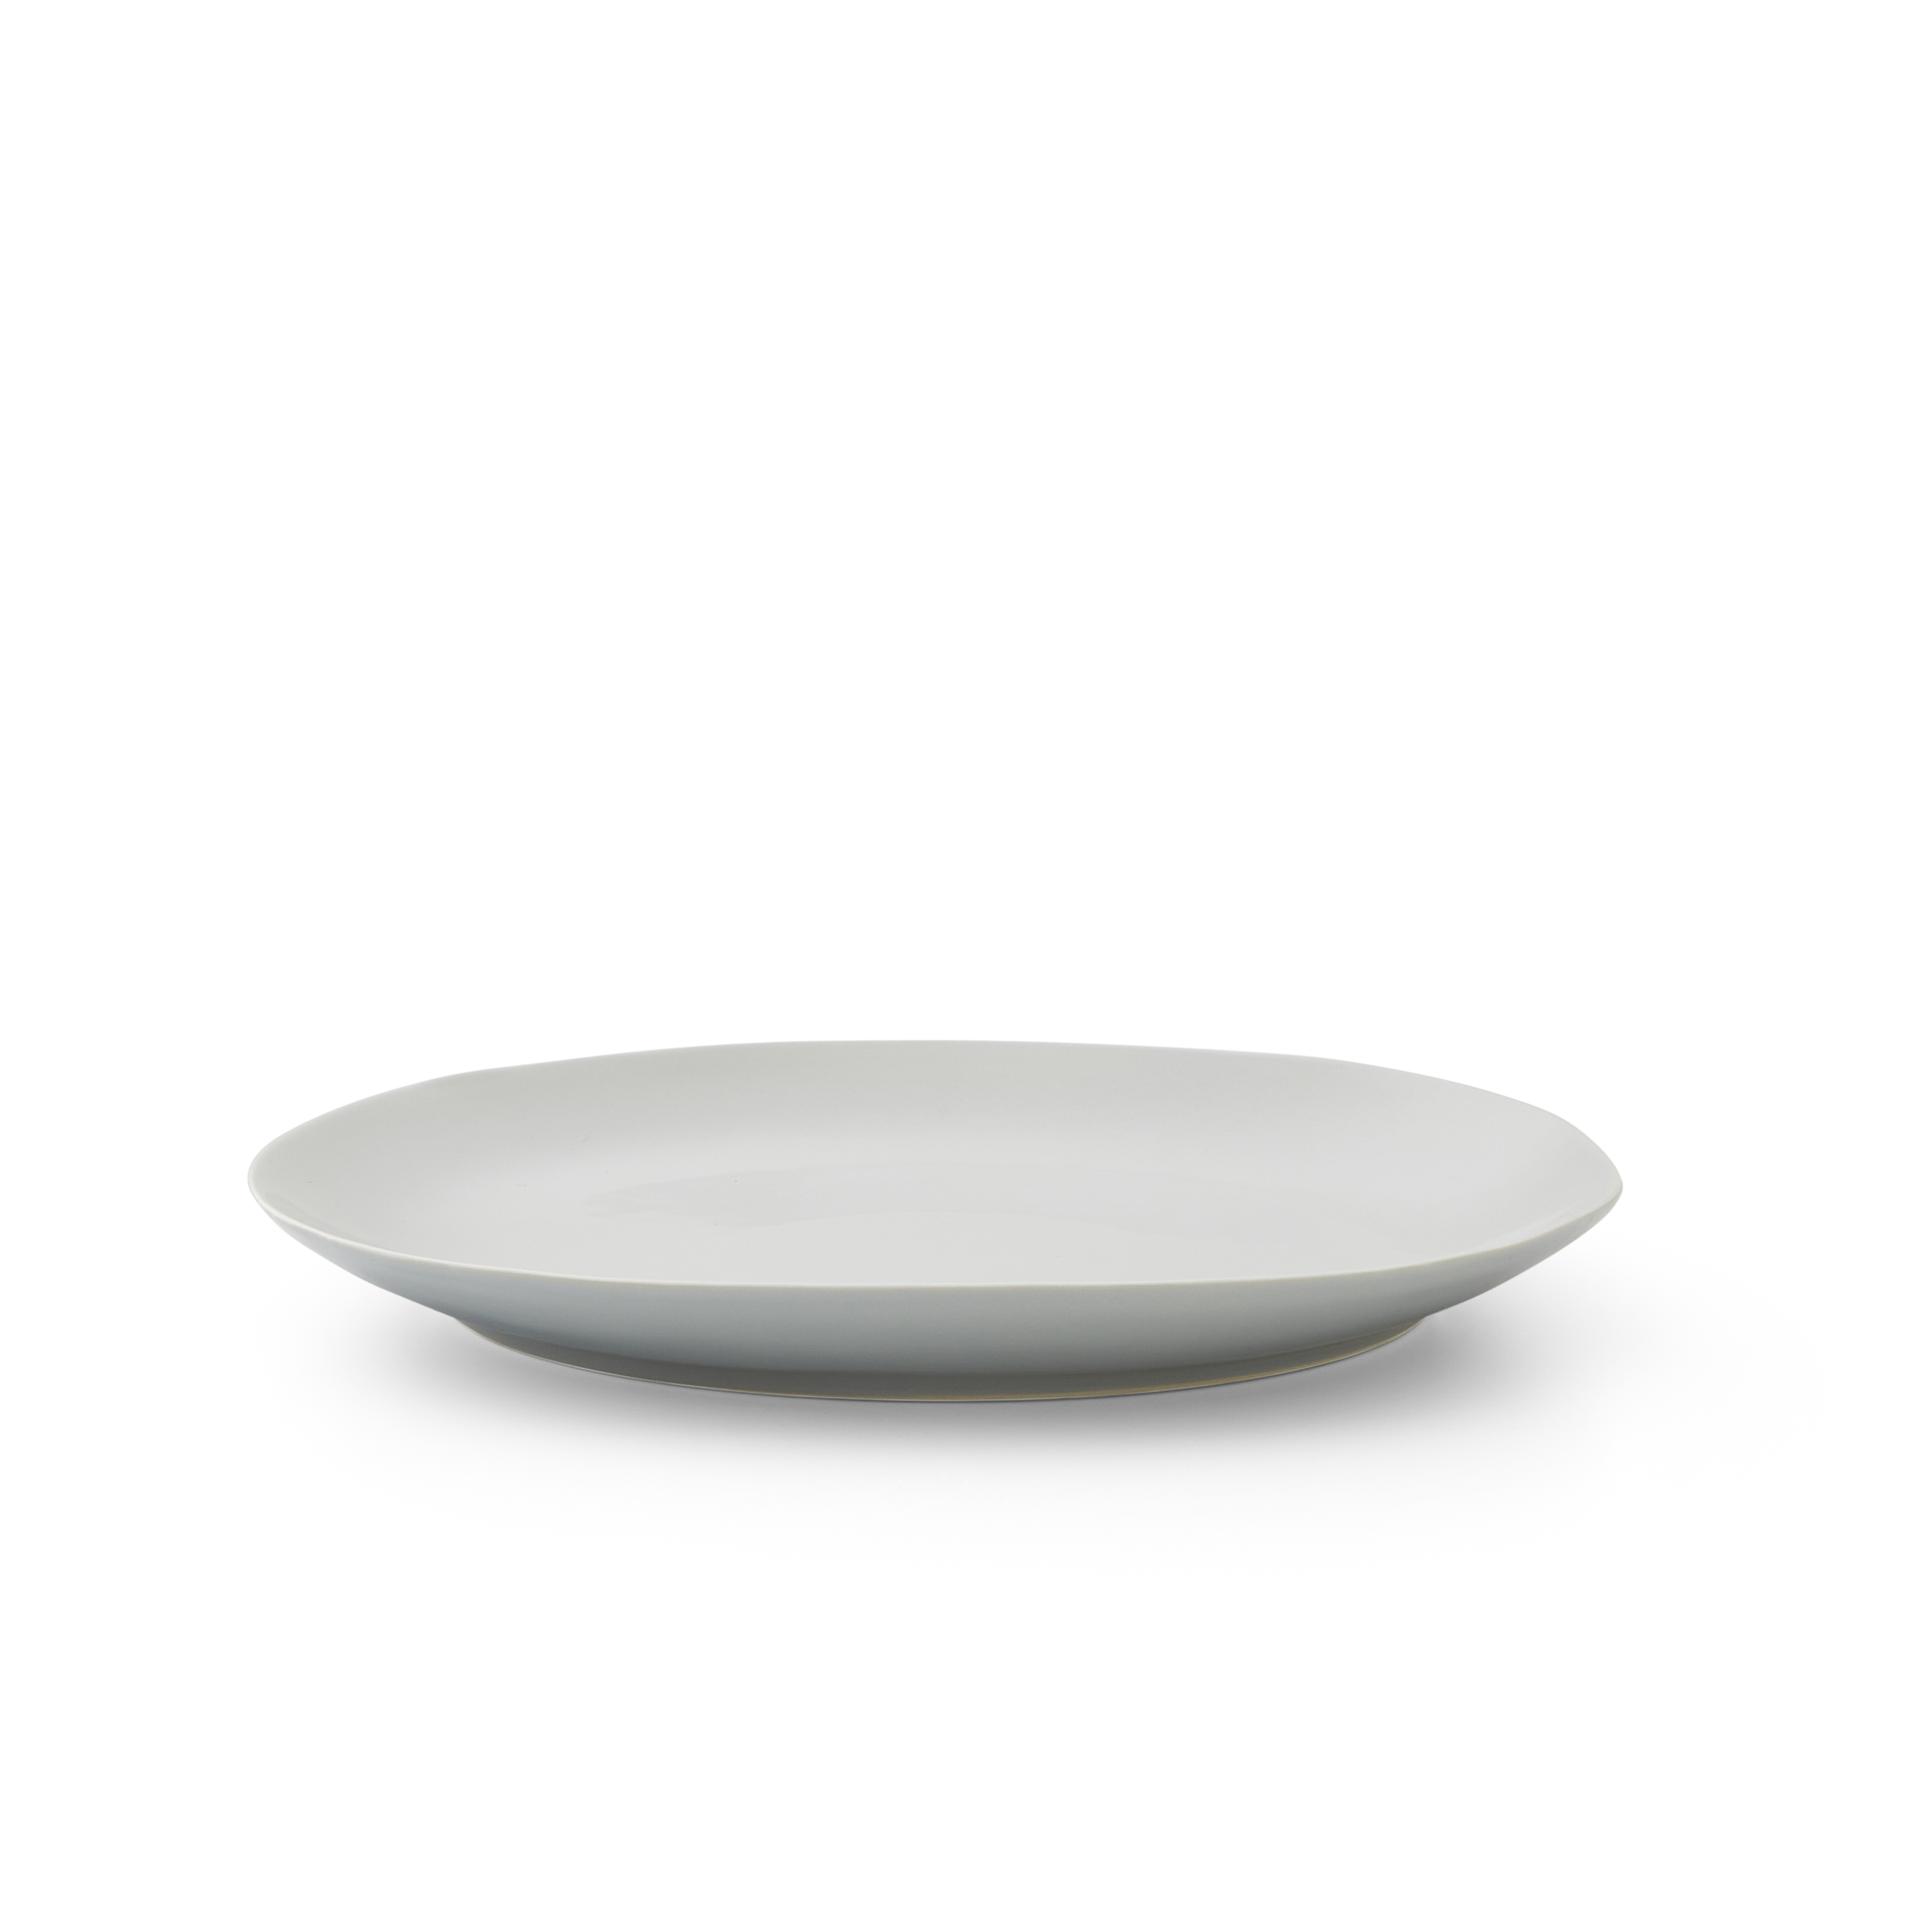 Sophie Conran Arbor Dinner Plate, Grey image number null